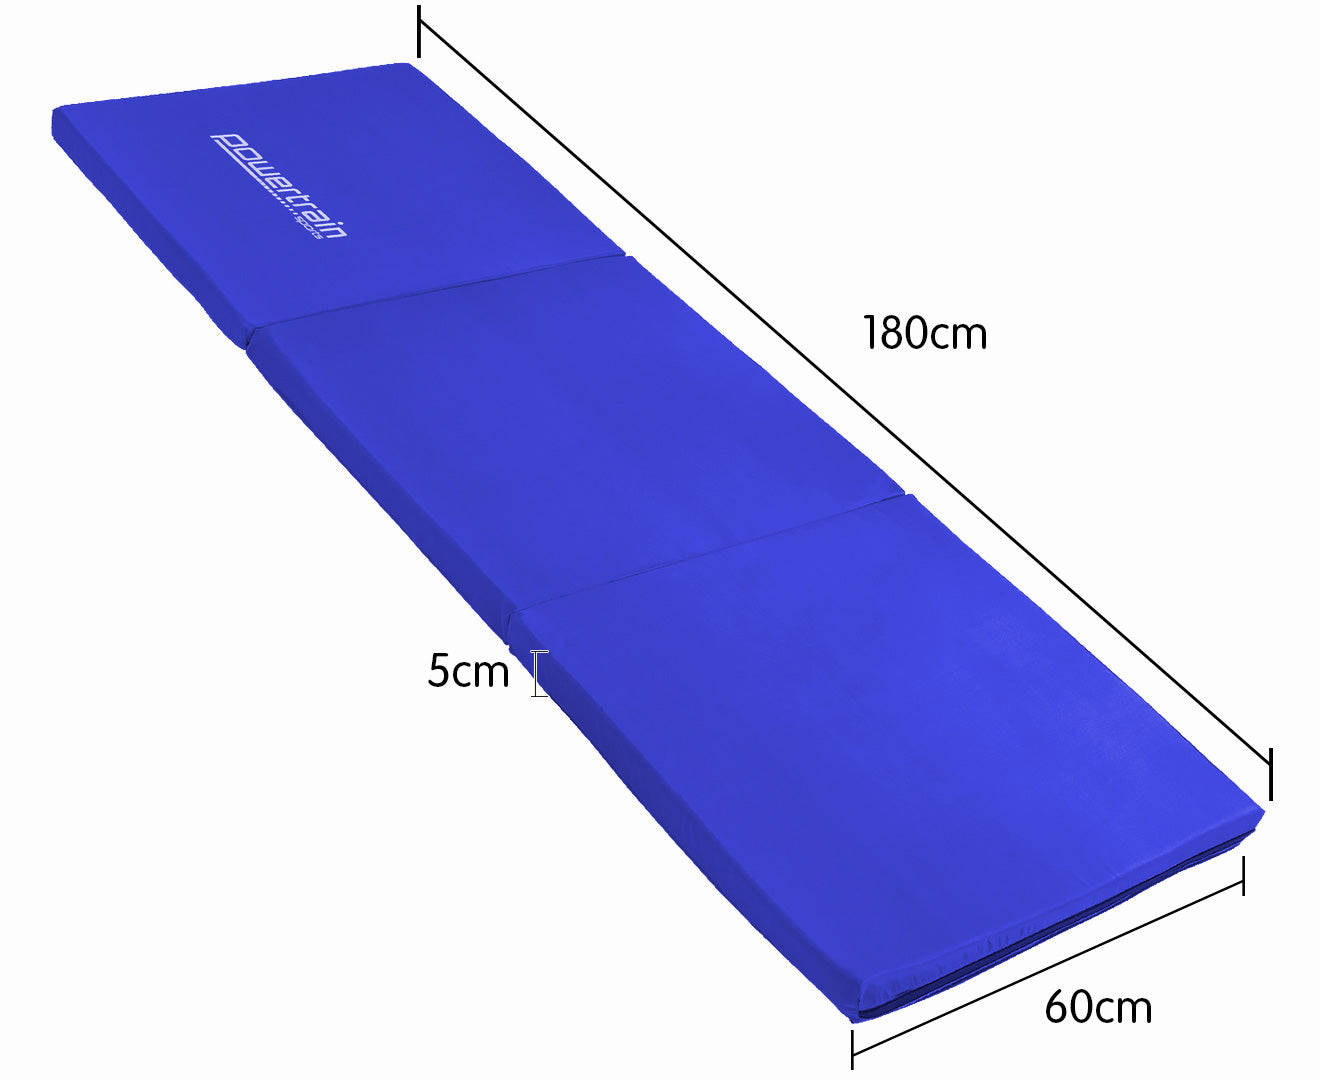 Powertrain Yoga Exercise Tri-fold Mat 180x60x5cm - Blue